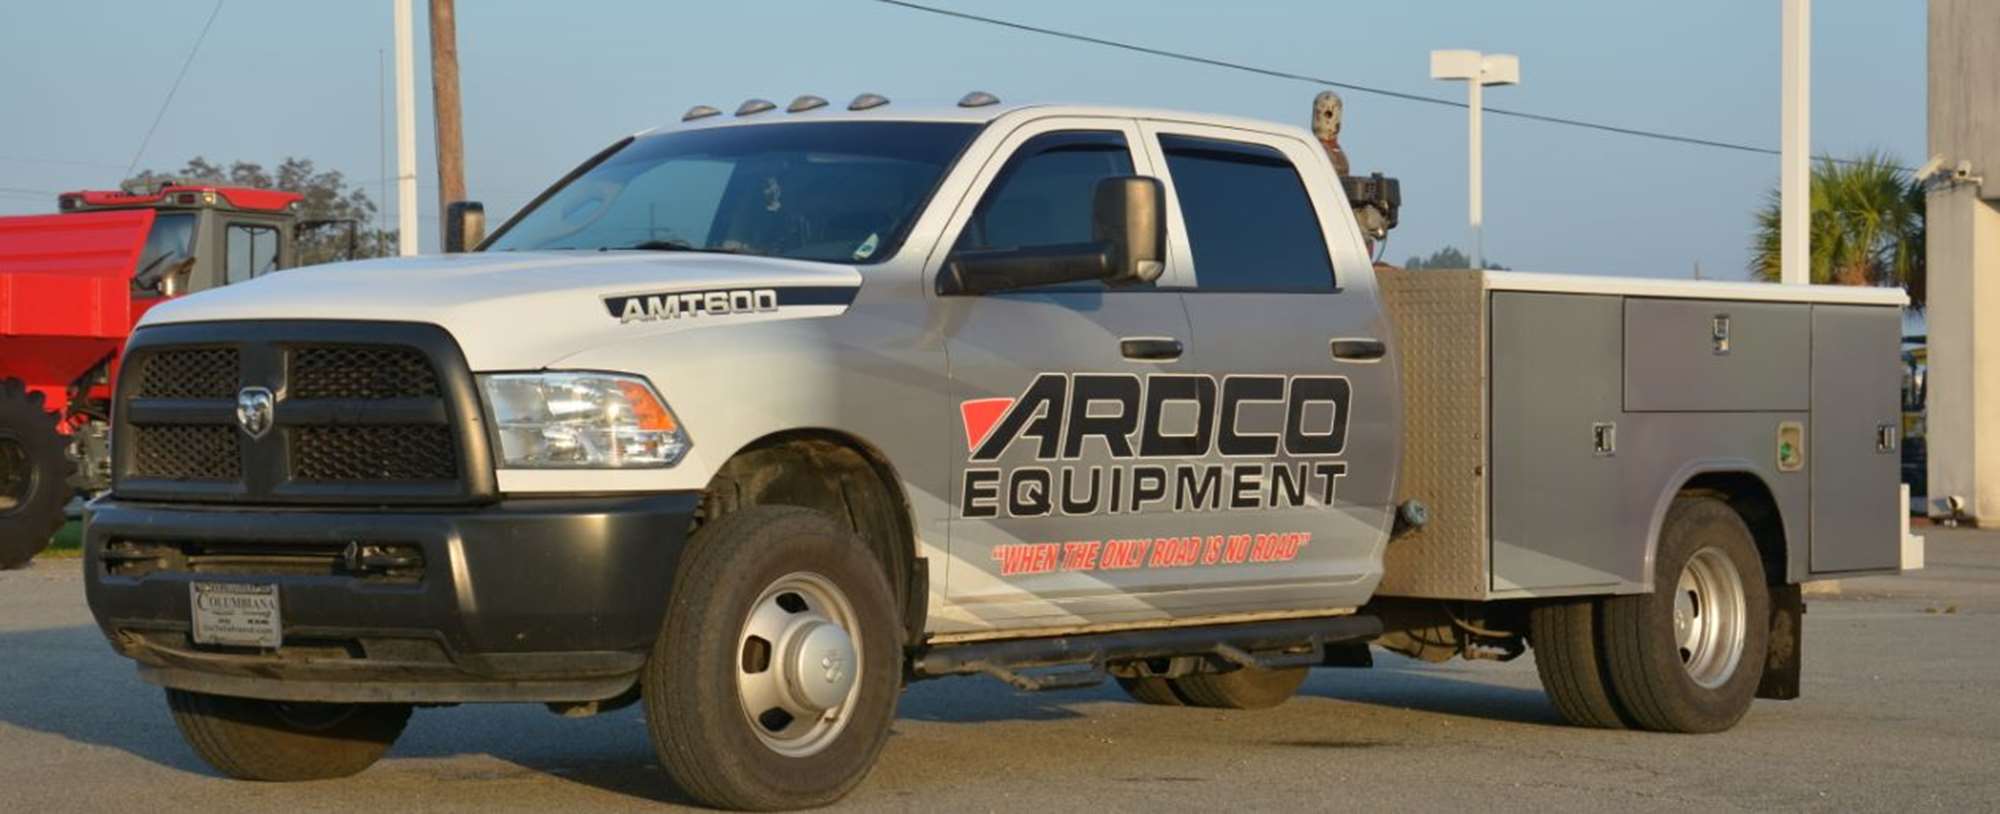 Ardco_Equipment_Banners_2_020217.jpg